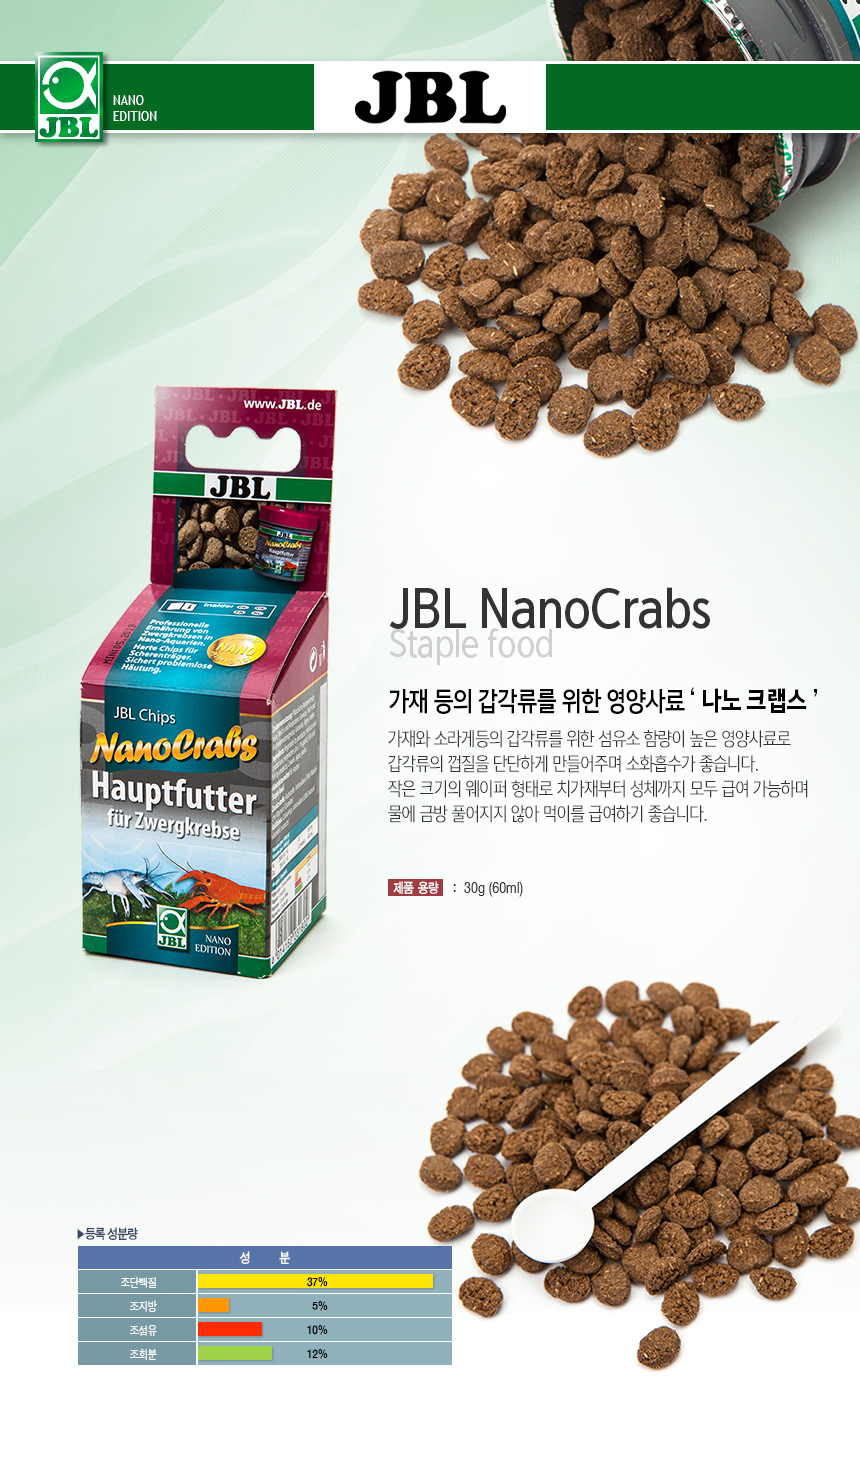 jbl-nano-crabs-detail_232500.jpg